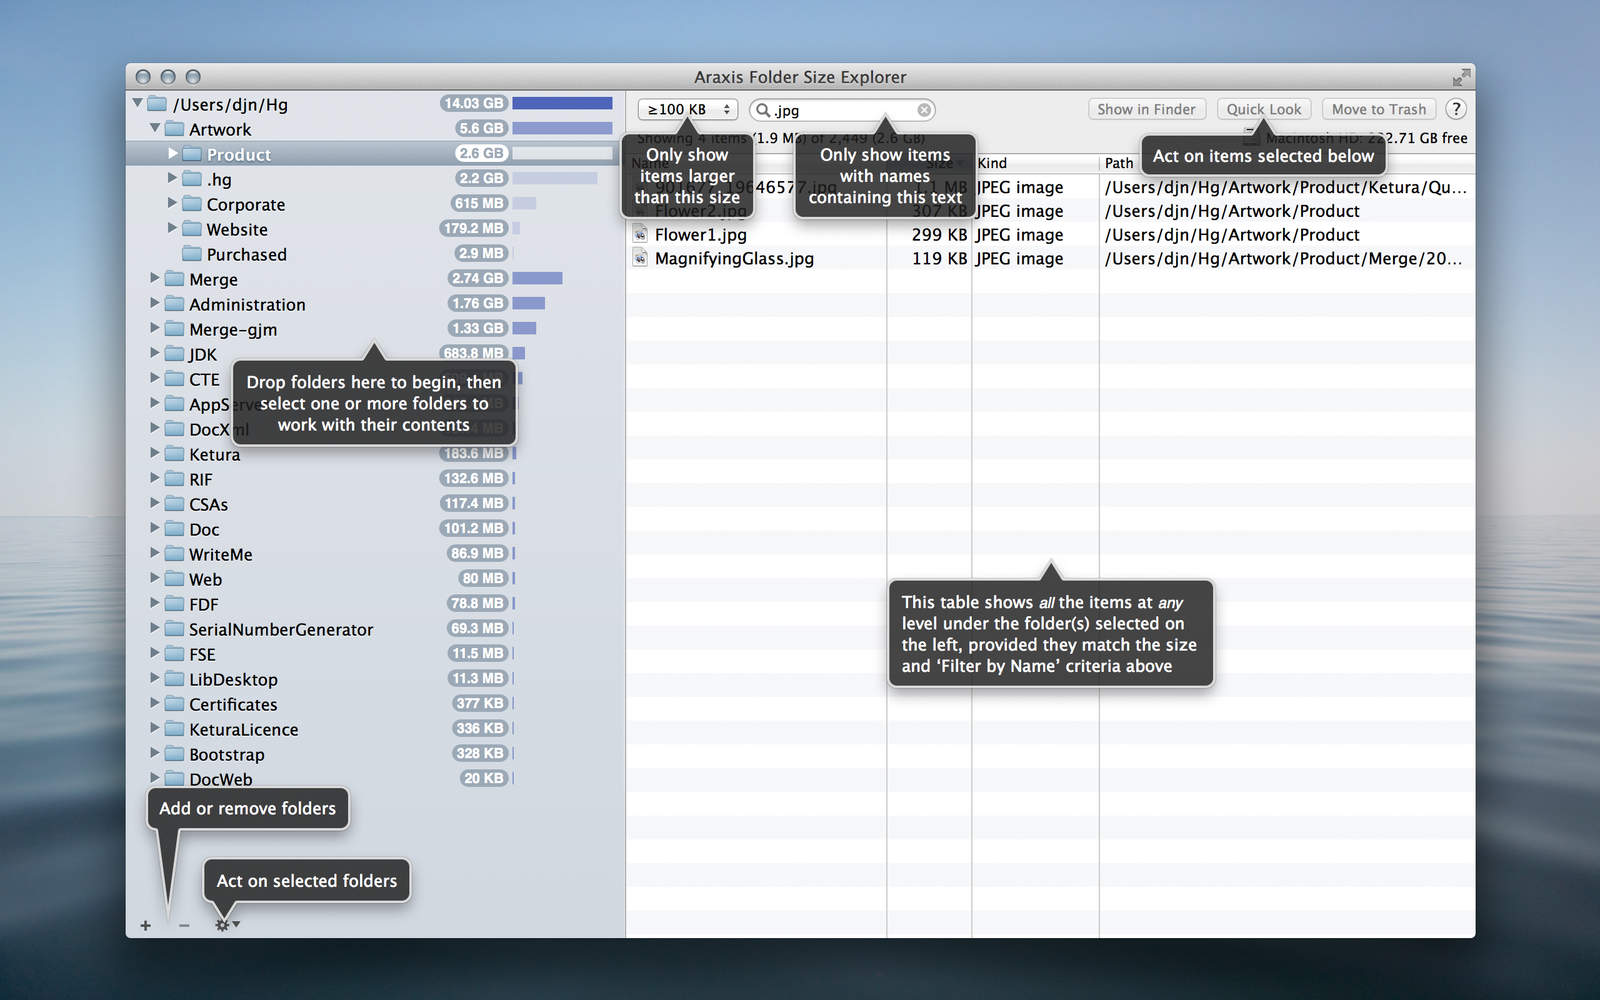 Araxis Folder Size Explorer 2013.1 : Main Window